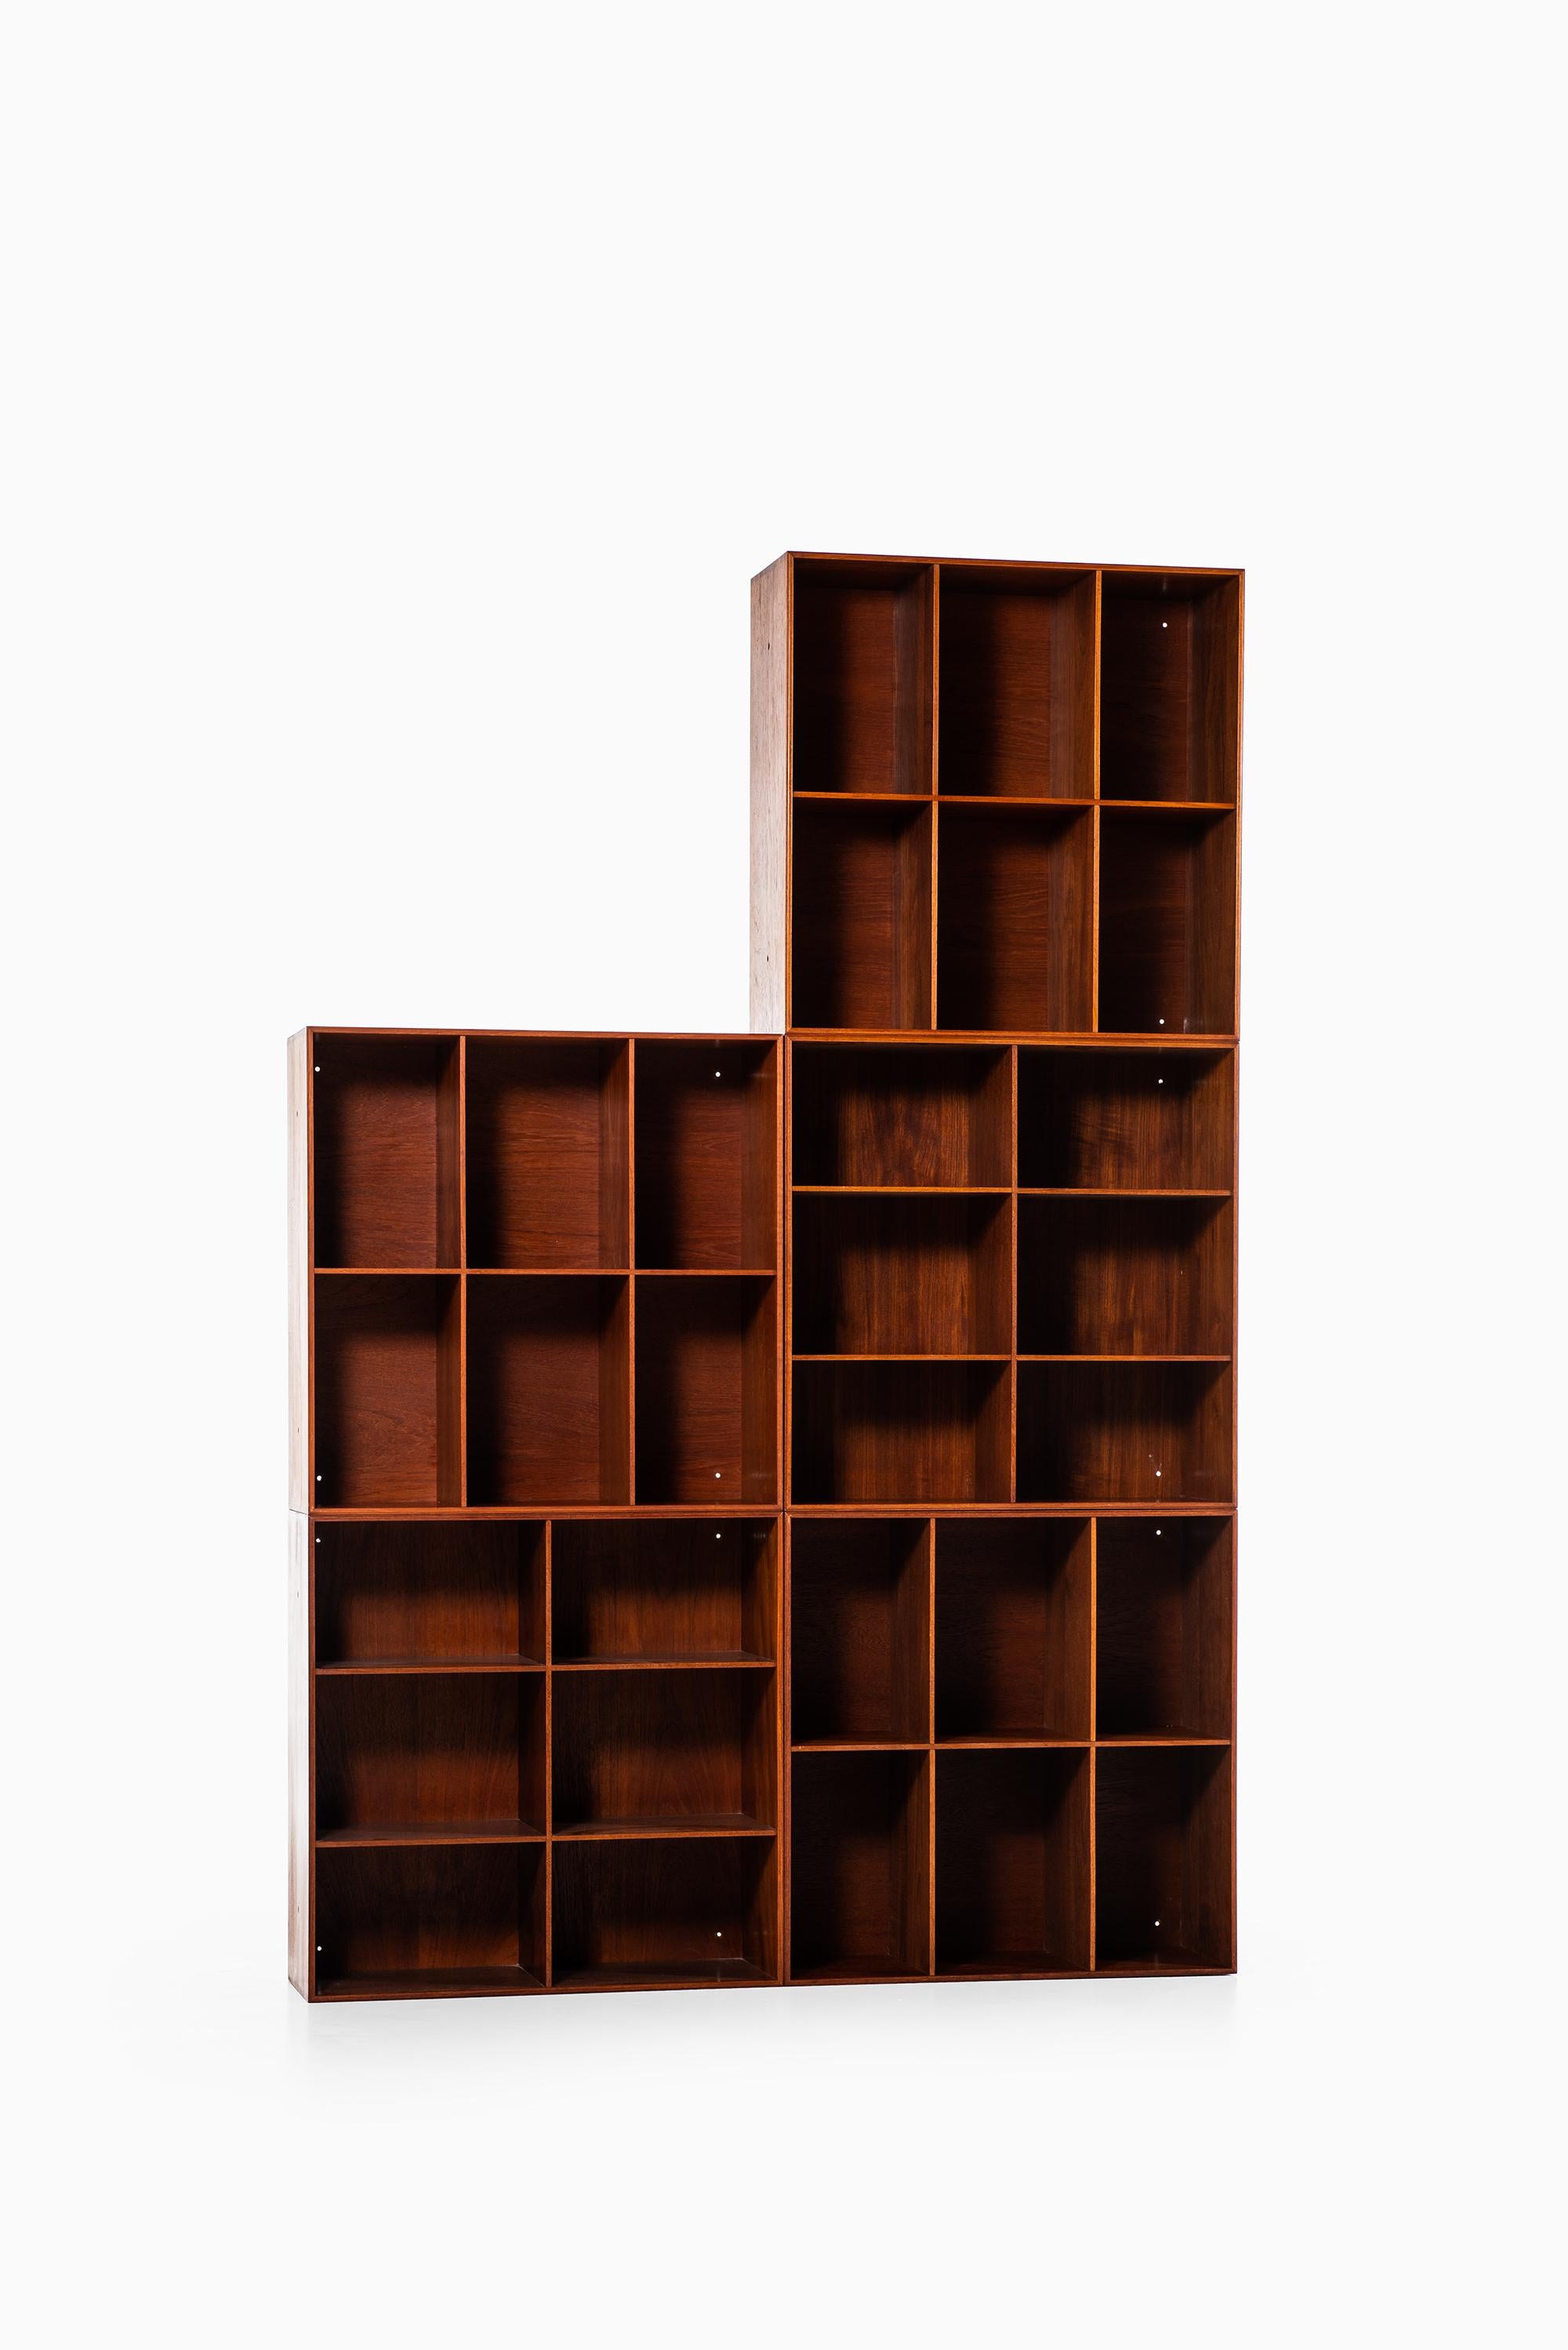 Set of 5 bookcases designed by Mogens Koch. Produced by Rud Rasmussen in Denmark.